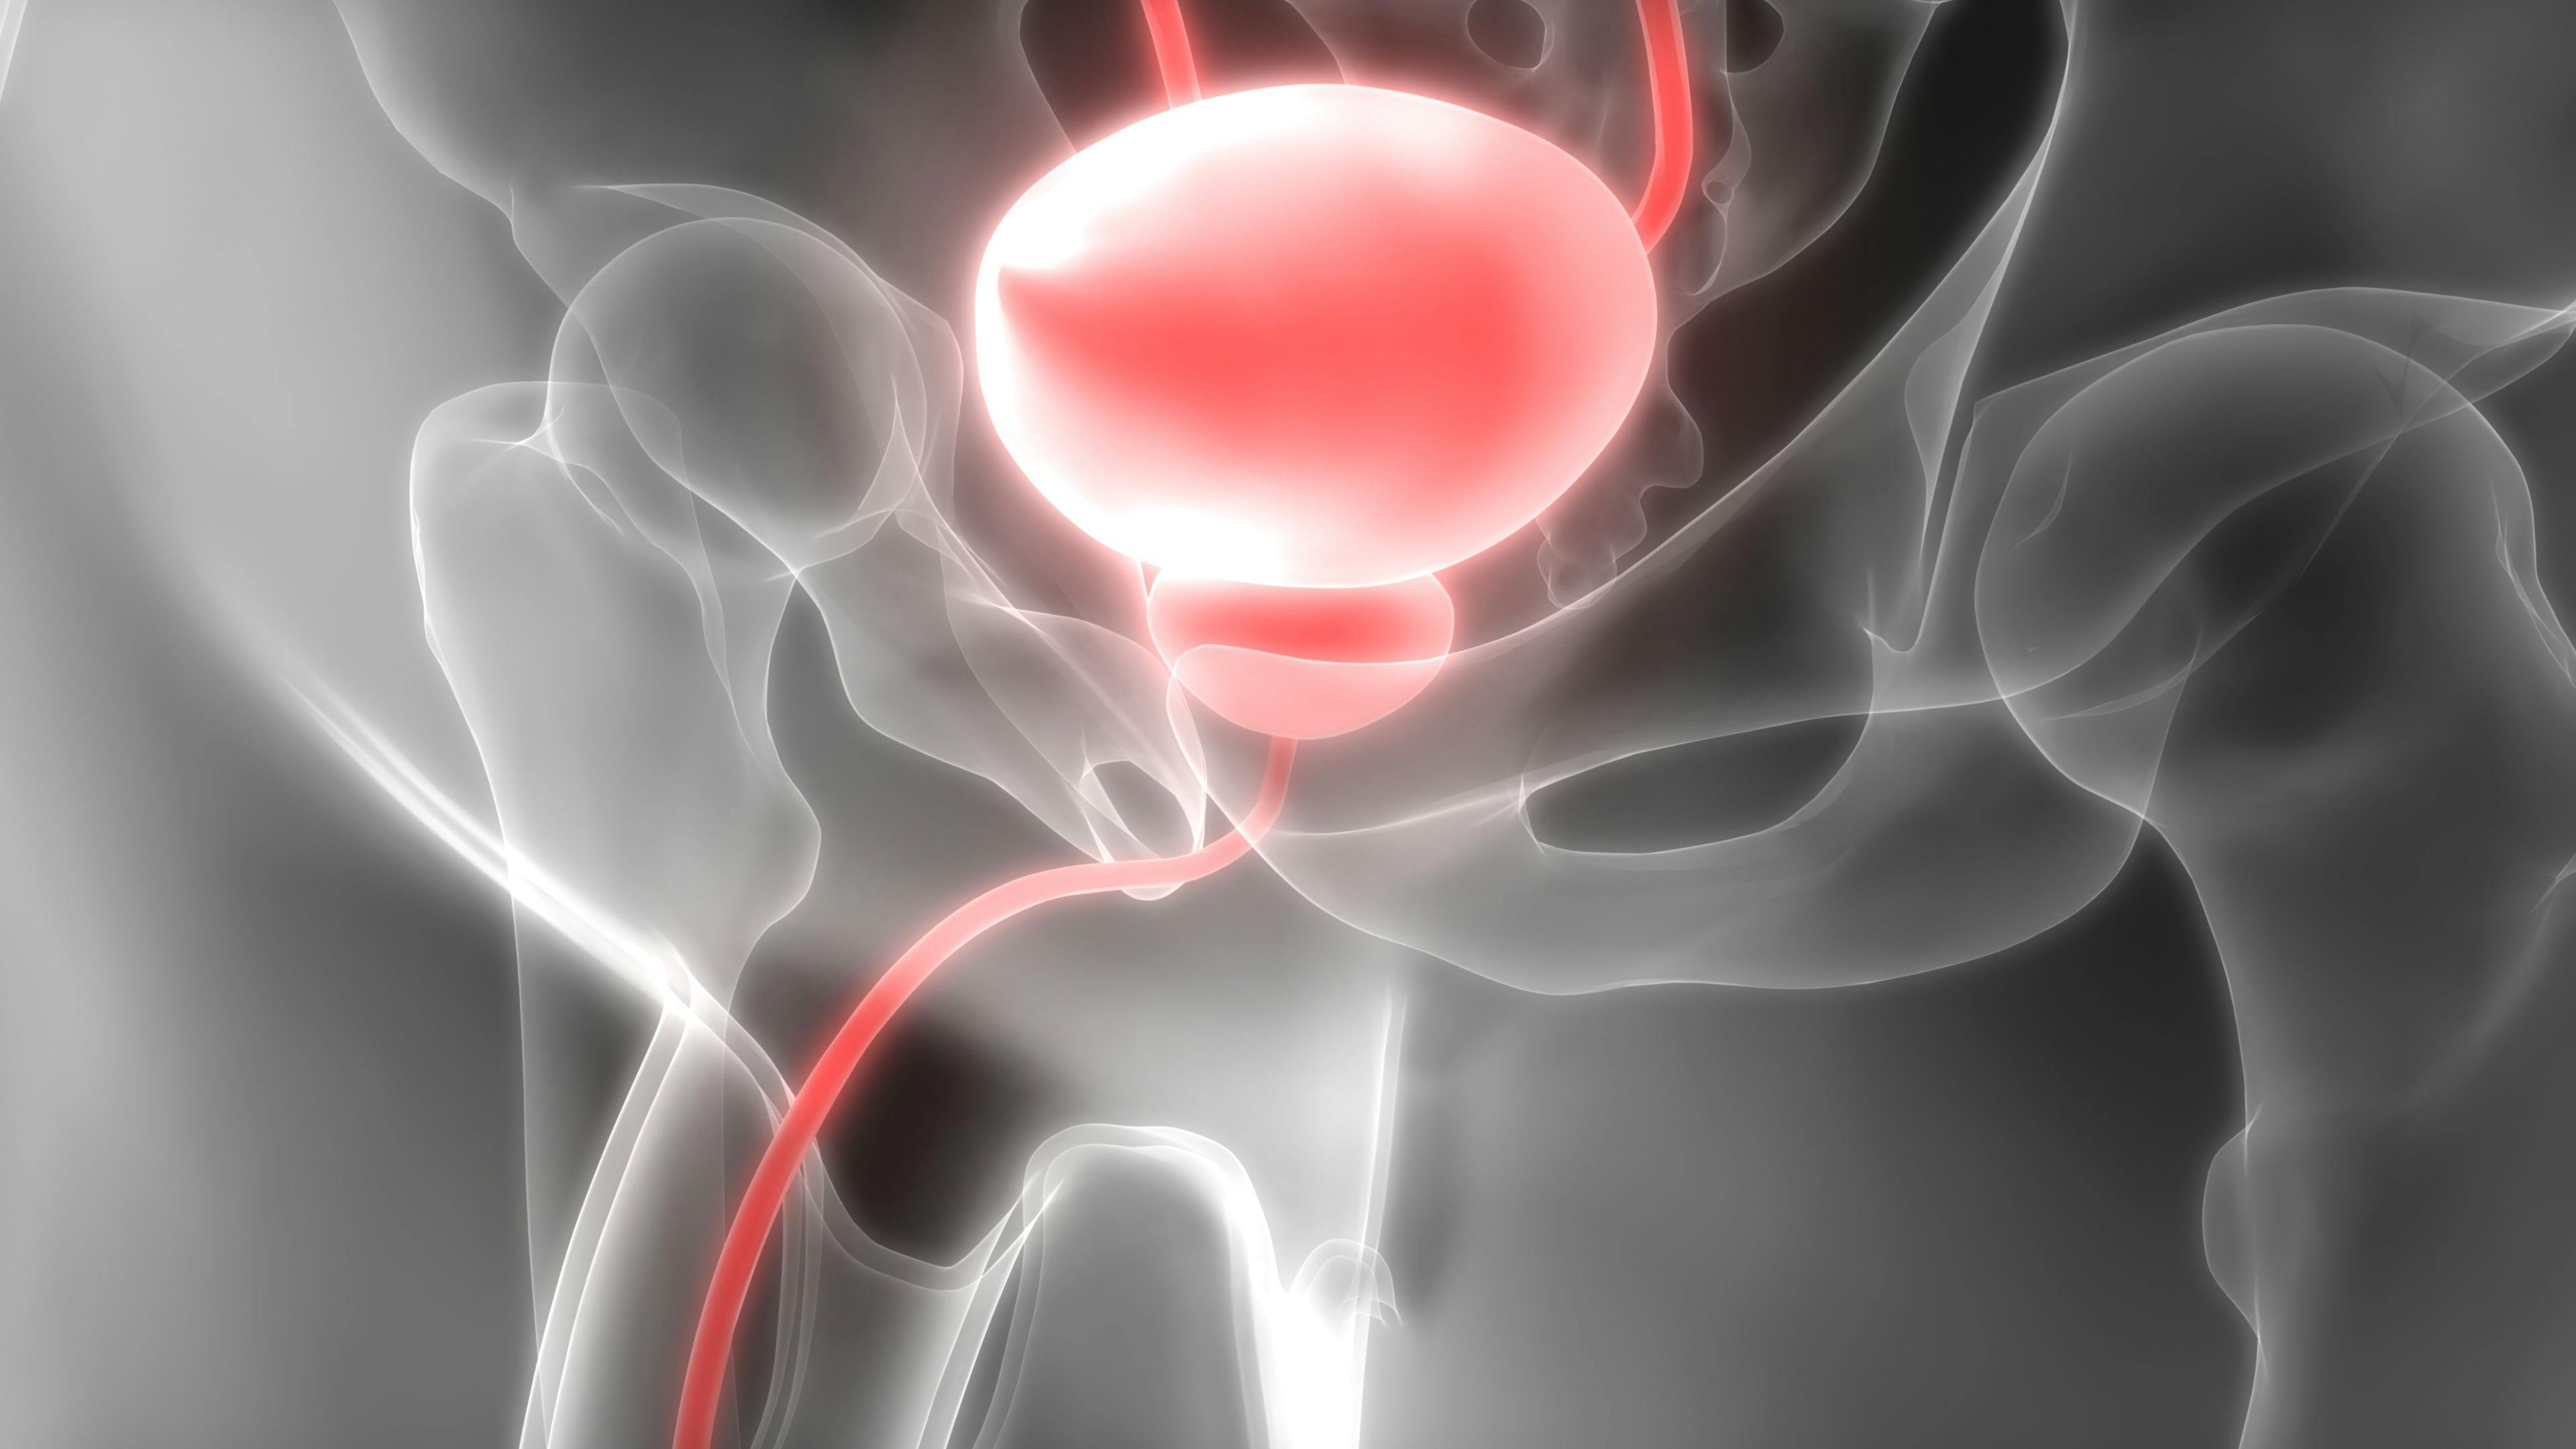 Niraparib Demonstrates Promising Anti-Tumor Activity in Metastatic Castration-Resistant Prostate Cancer